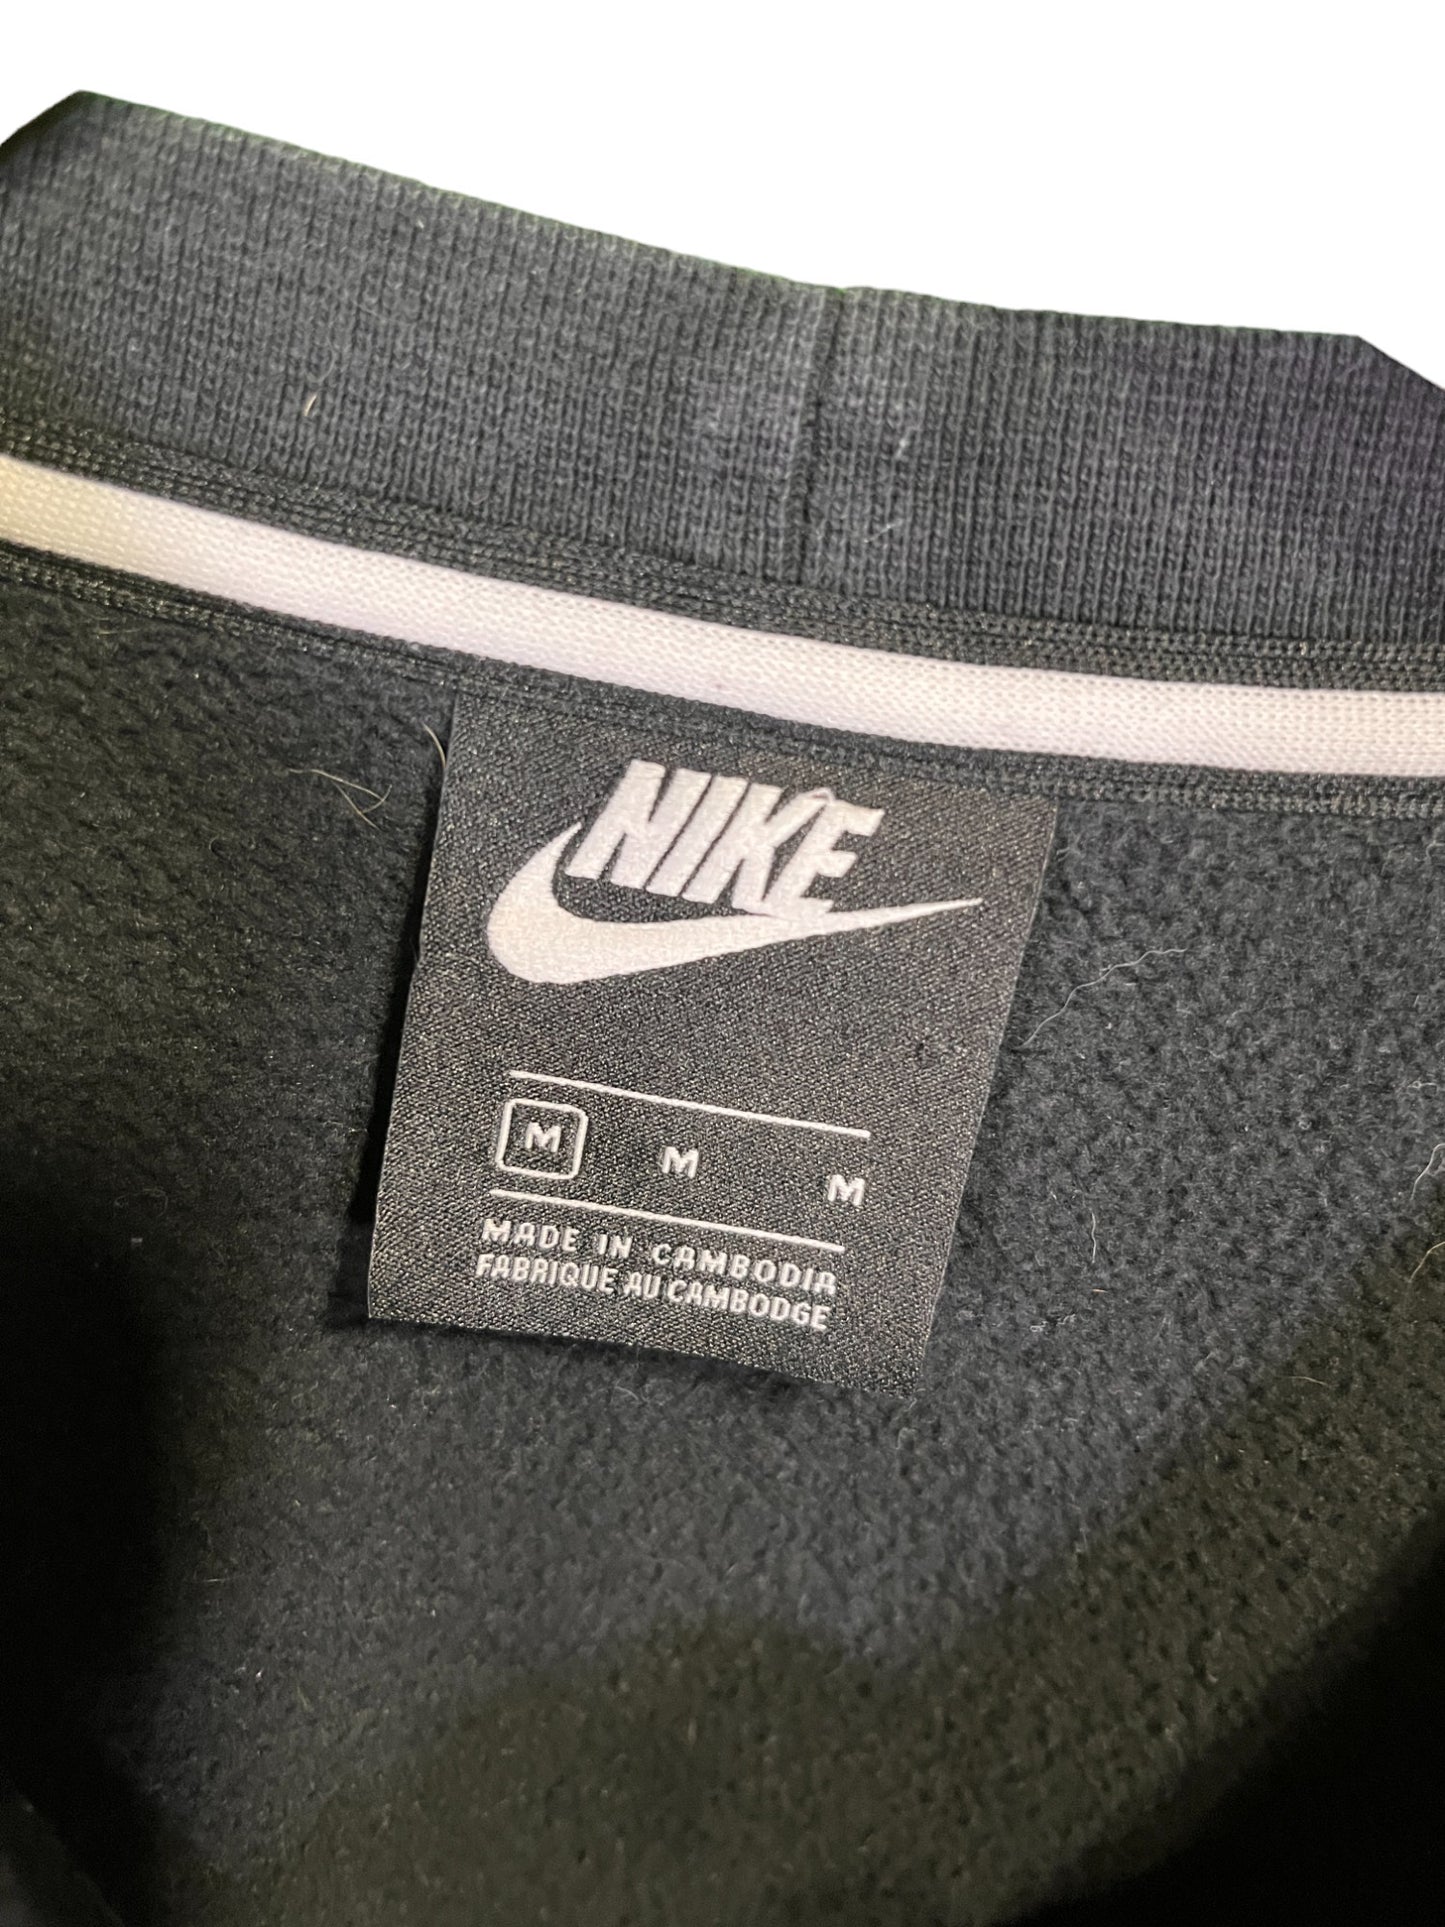 Nike Air Black Striped Swoosh Logo Crewneck Sweater Size Medium